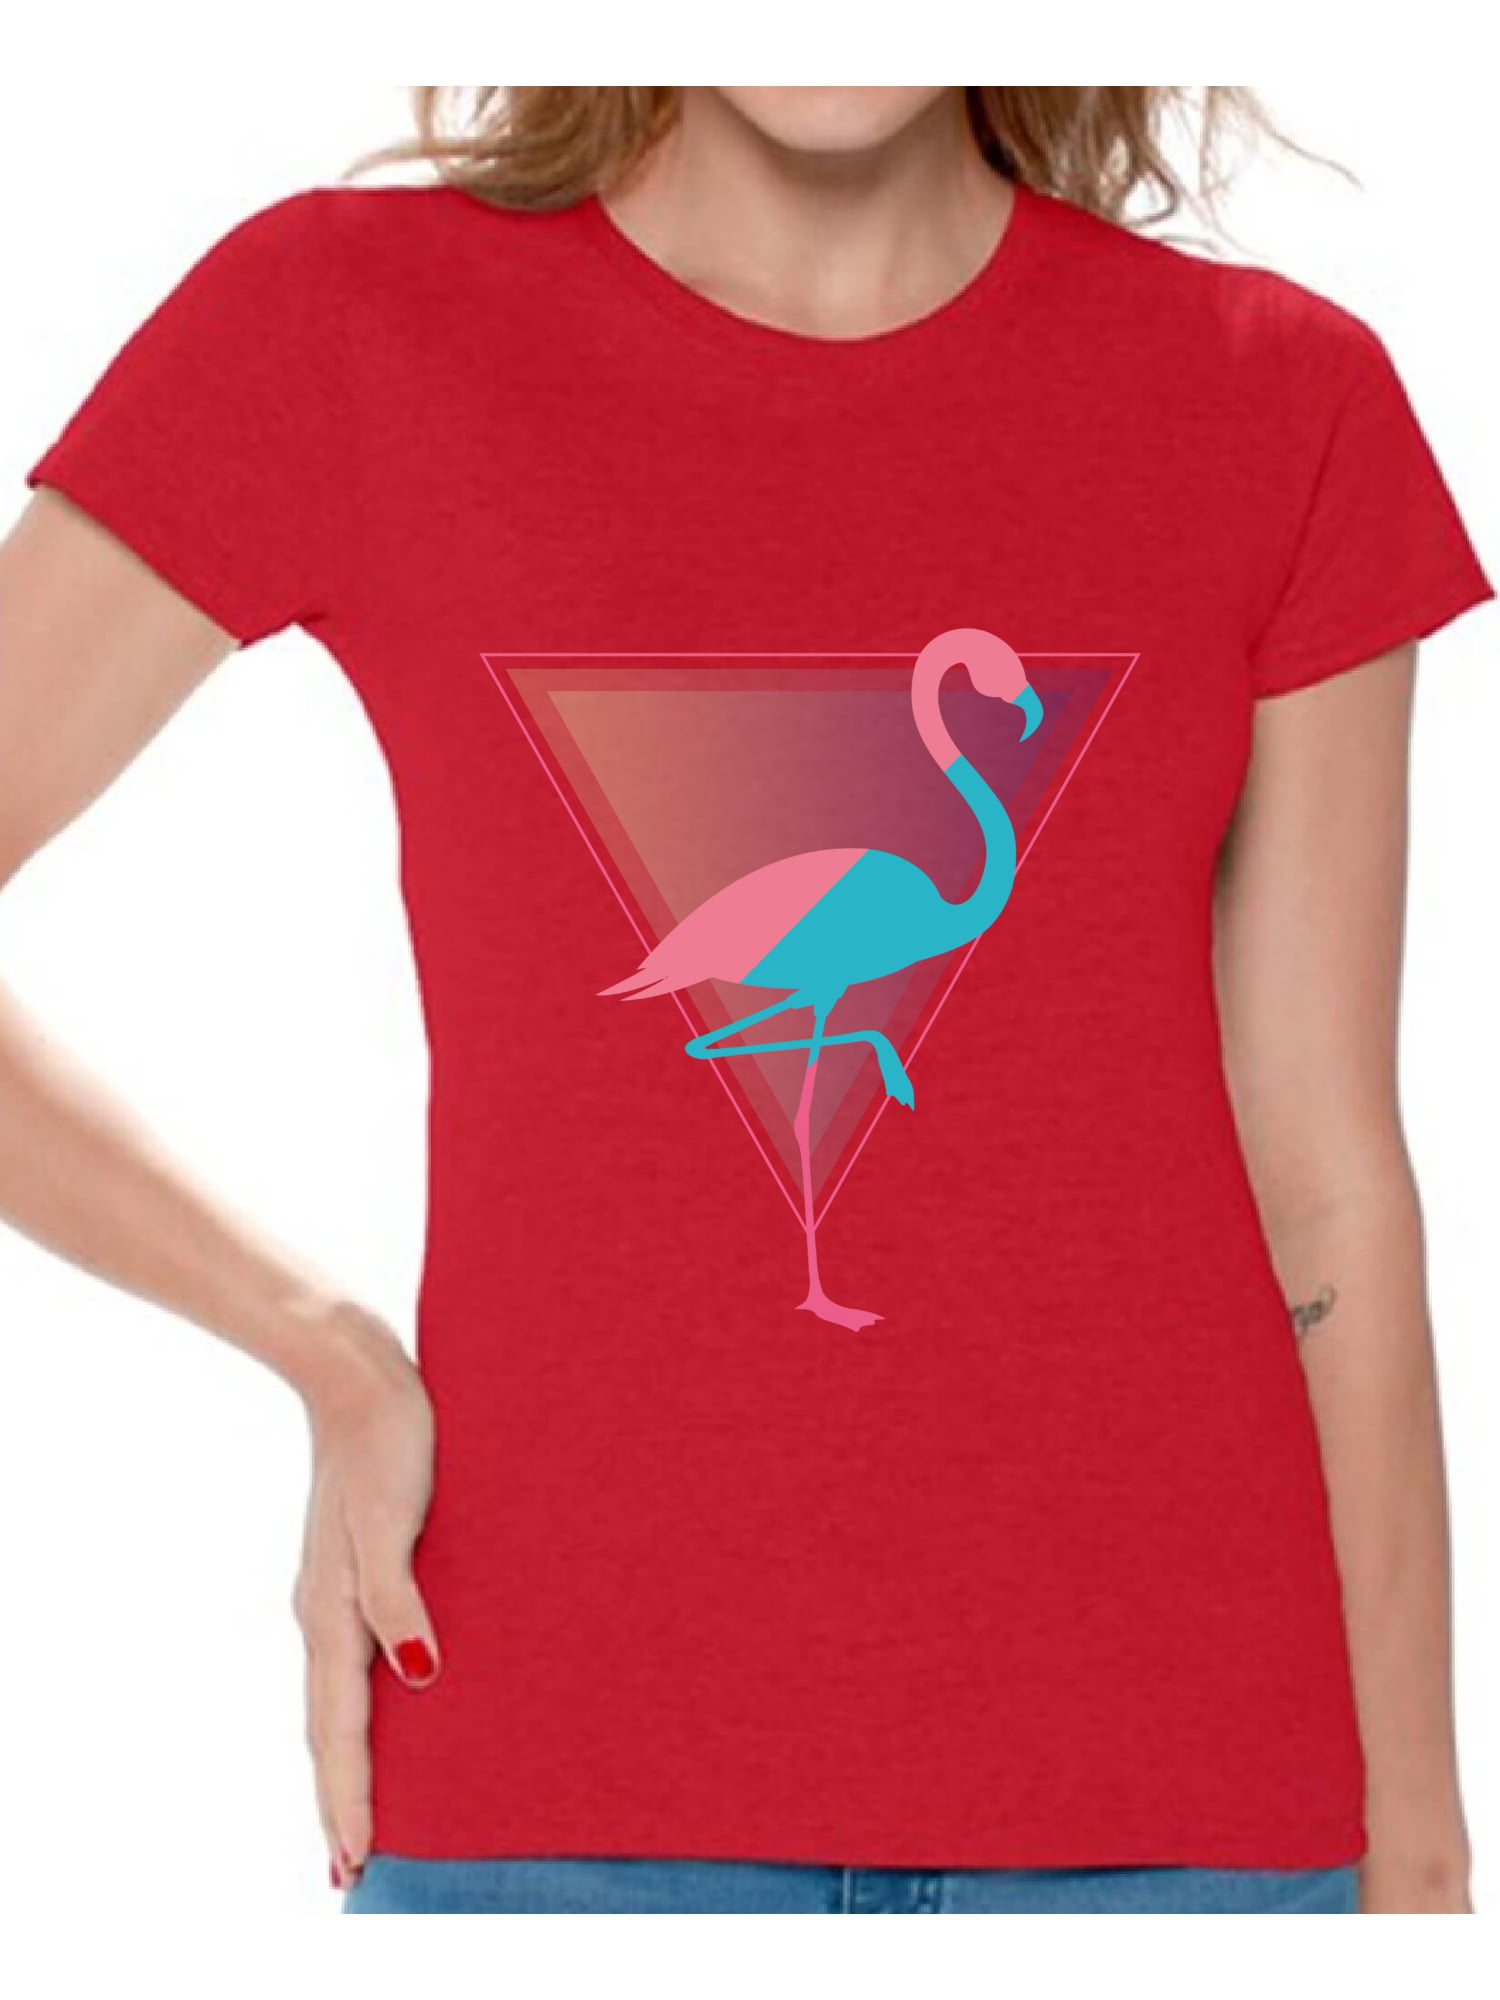 Awkward Styles - Awkward Styles Flamingo Party Tshirt for Women Retro Flamingo Shirt Flamingo ...